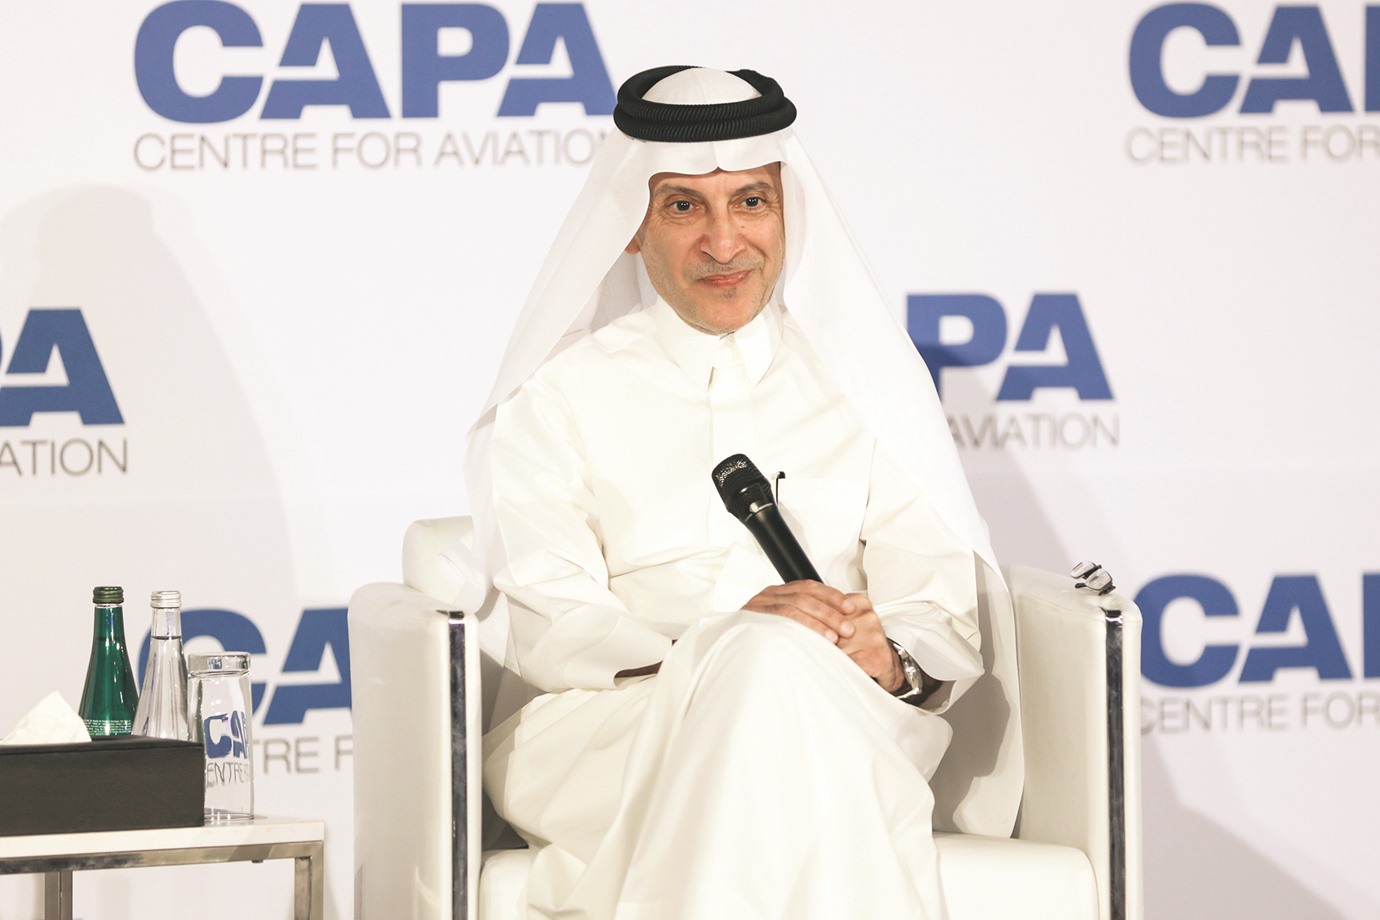 Qatar Airways hosts second edition of "CAPA Qatar" Summit